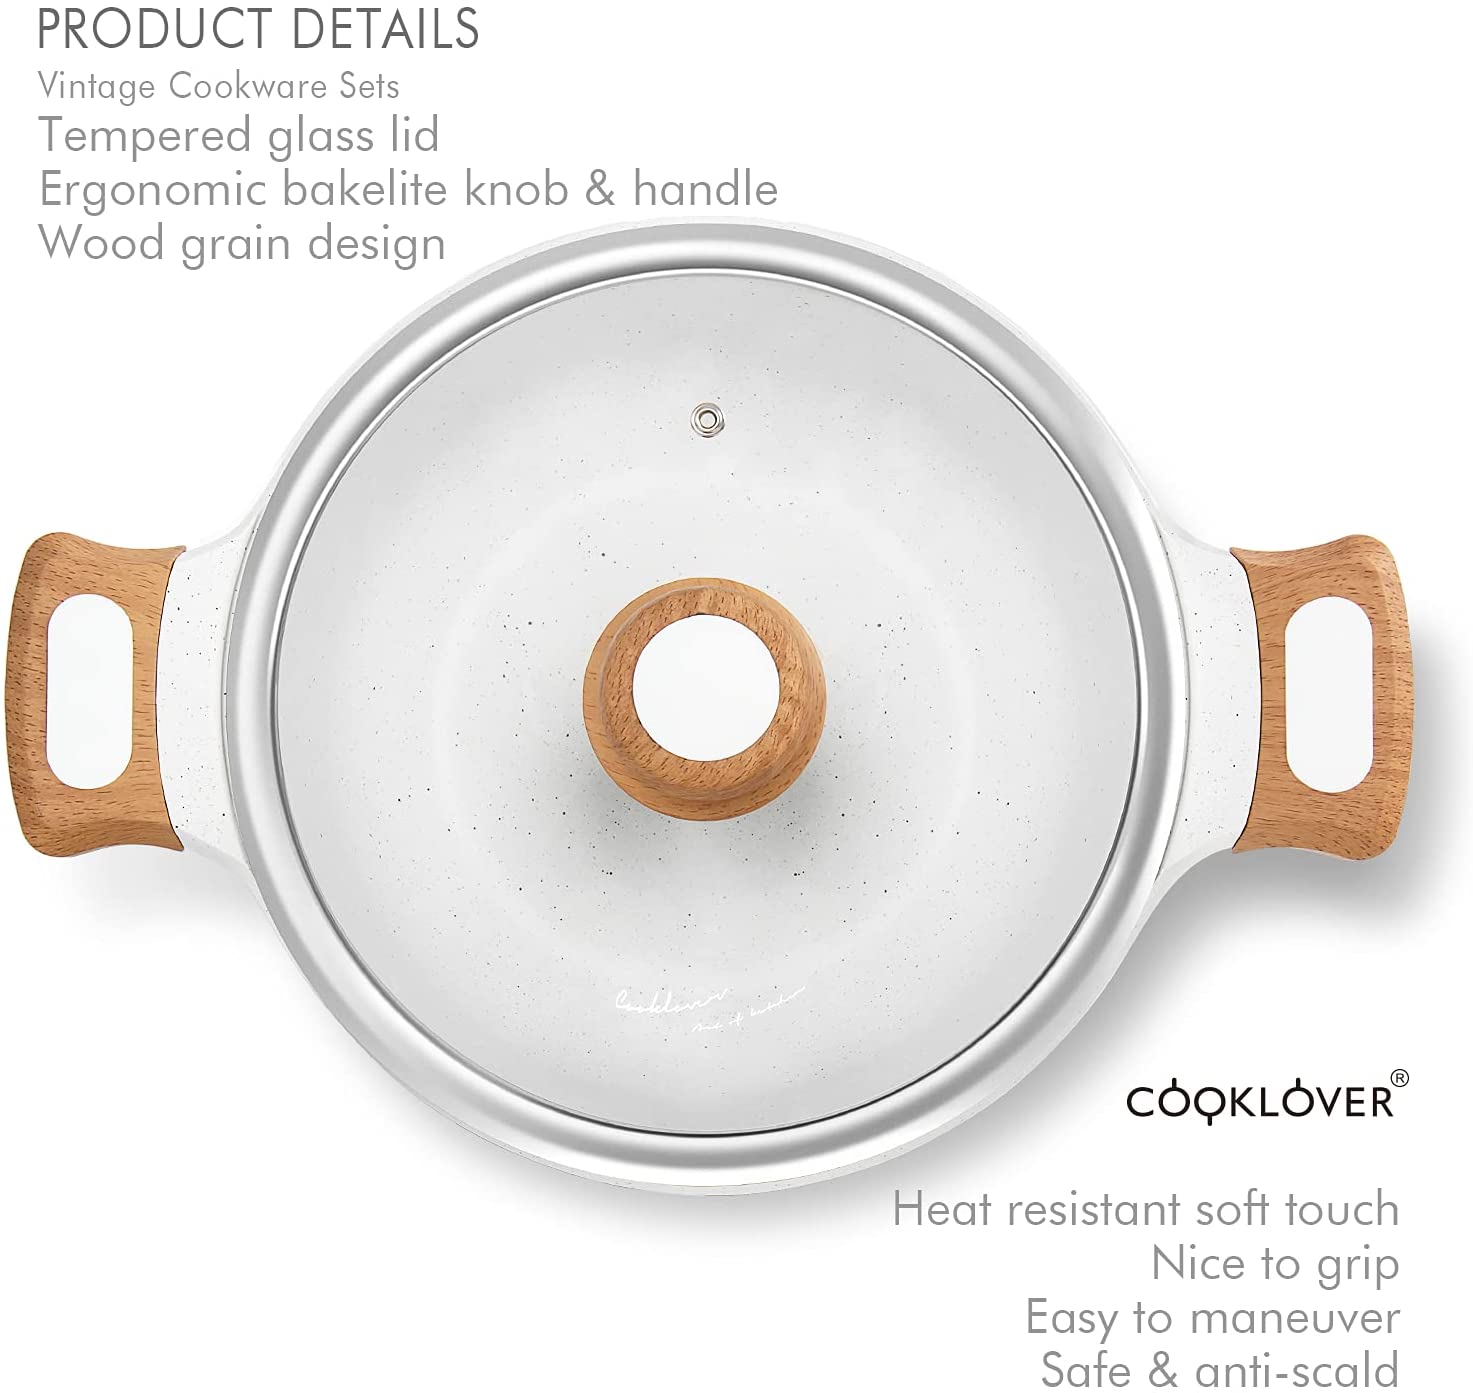 Ceramic Non-Stick Cookware Set – slyinspireme